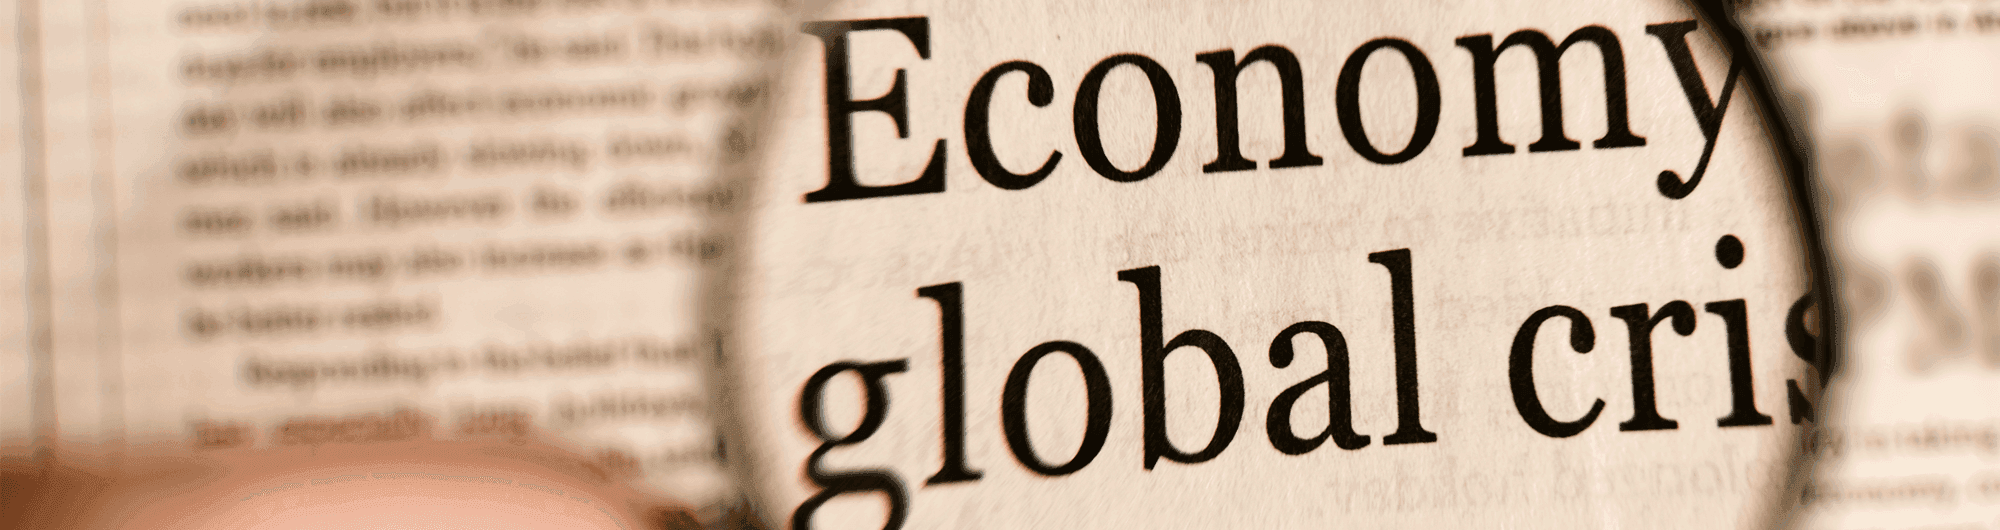 lupa sob jornal destacando "economy global crisis"